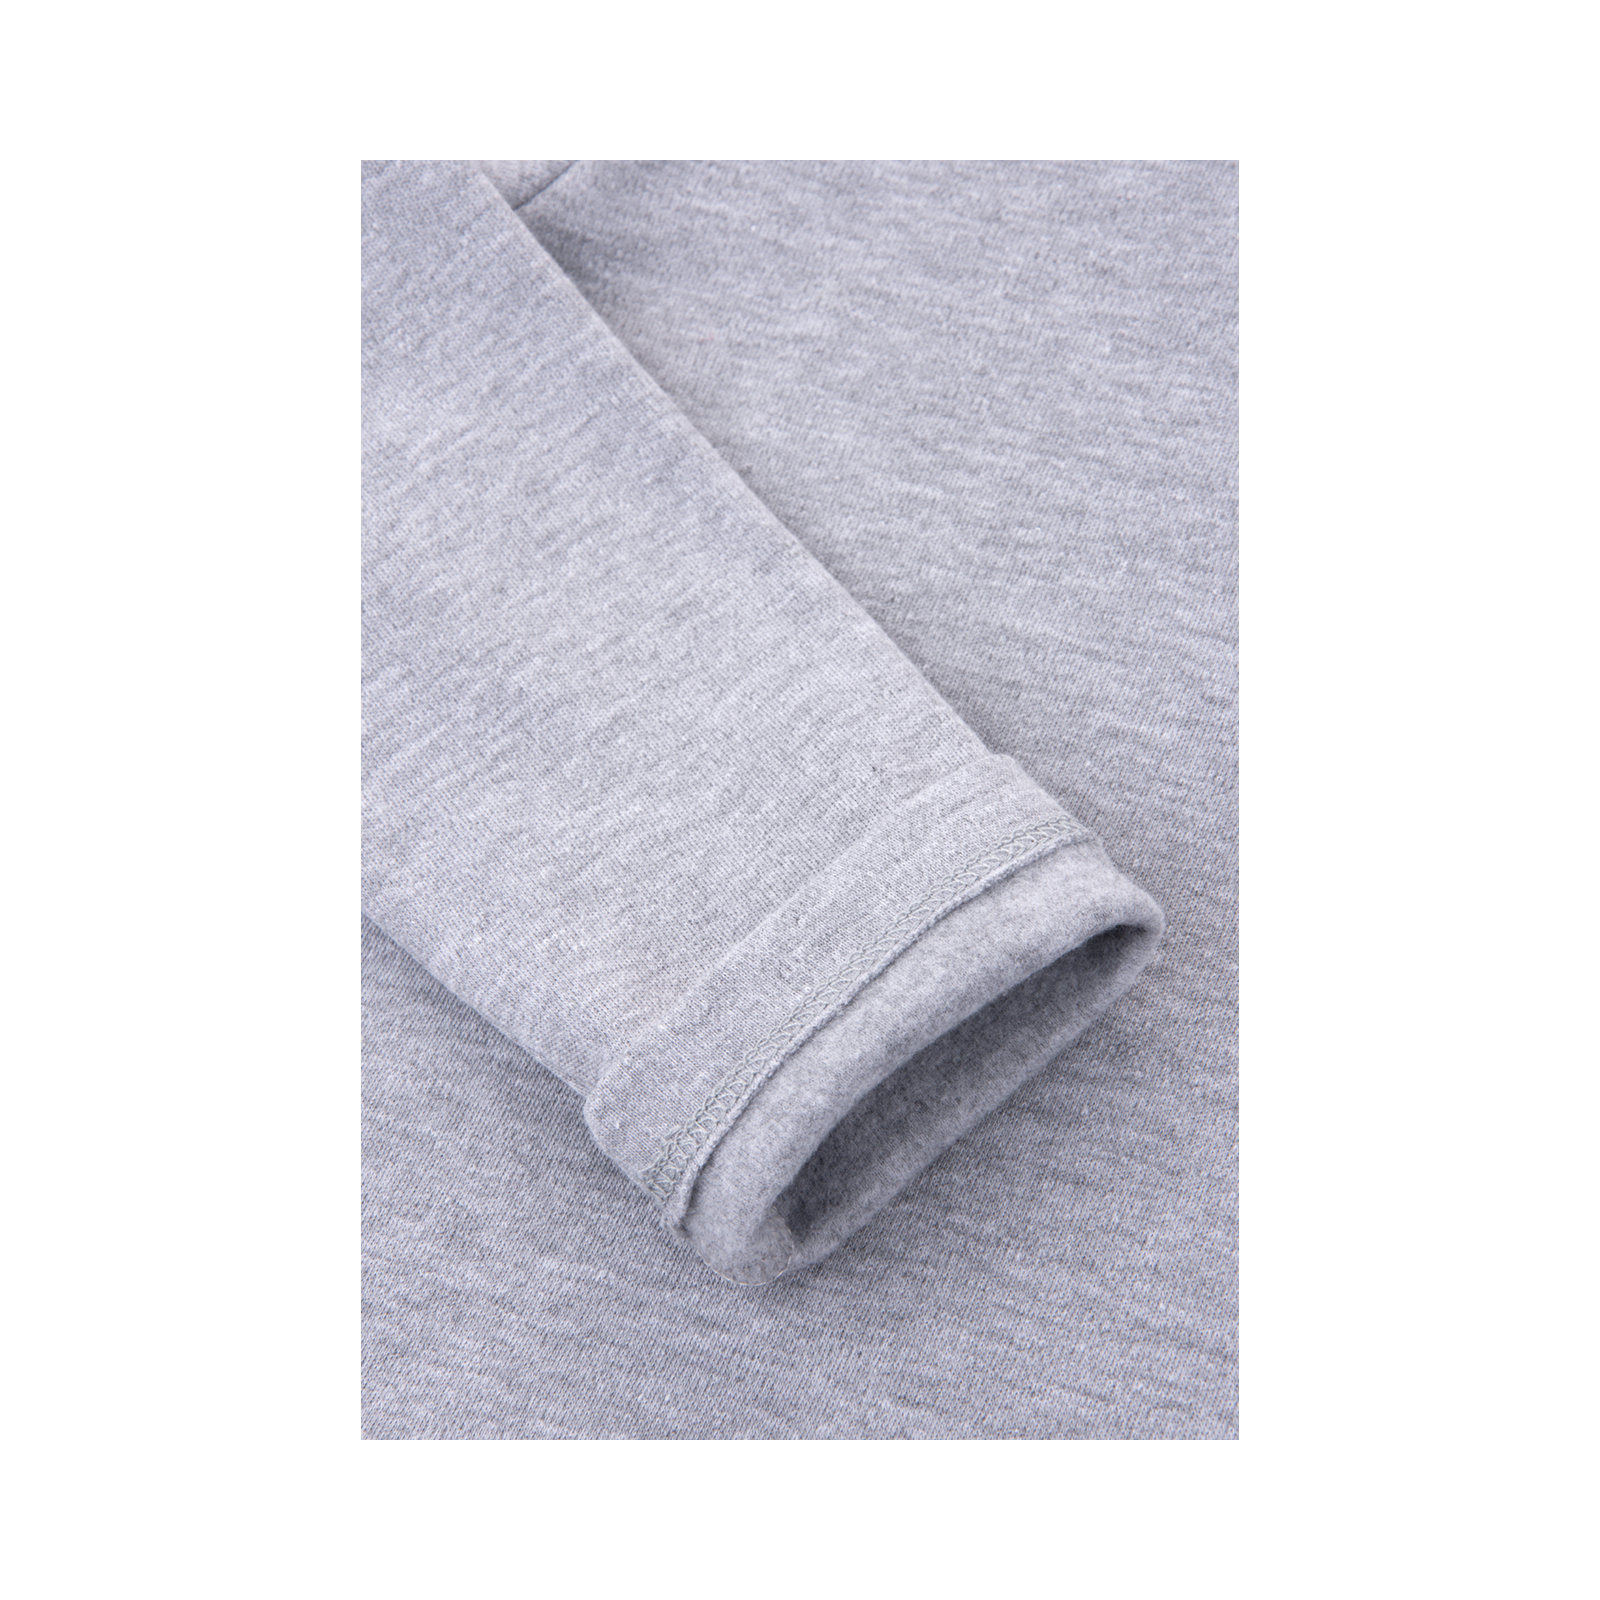 Кофта Lovetti водолазка серая меланжевая (1013-140-gray) изображение 4